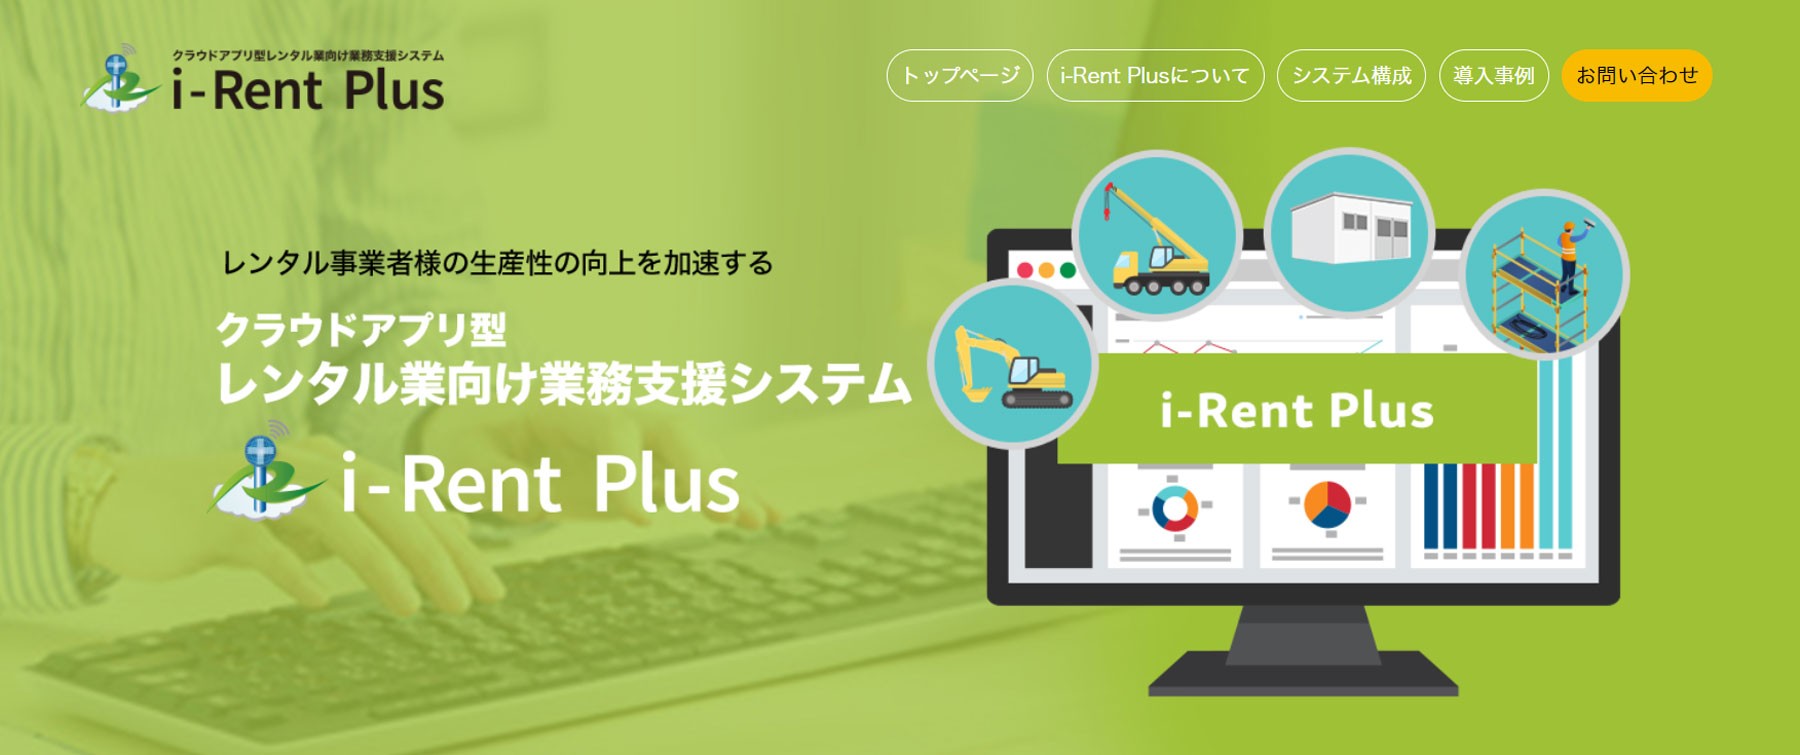 i-Rent Plus公式Webサイト